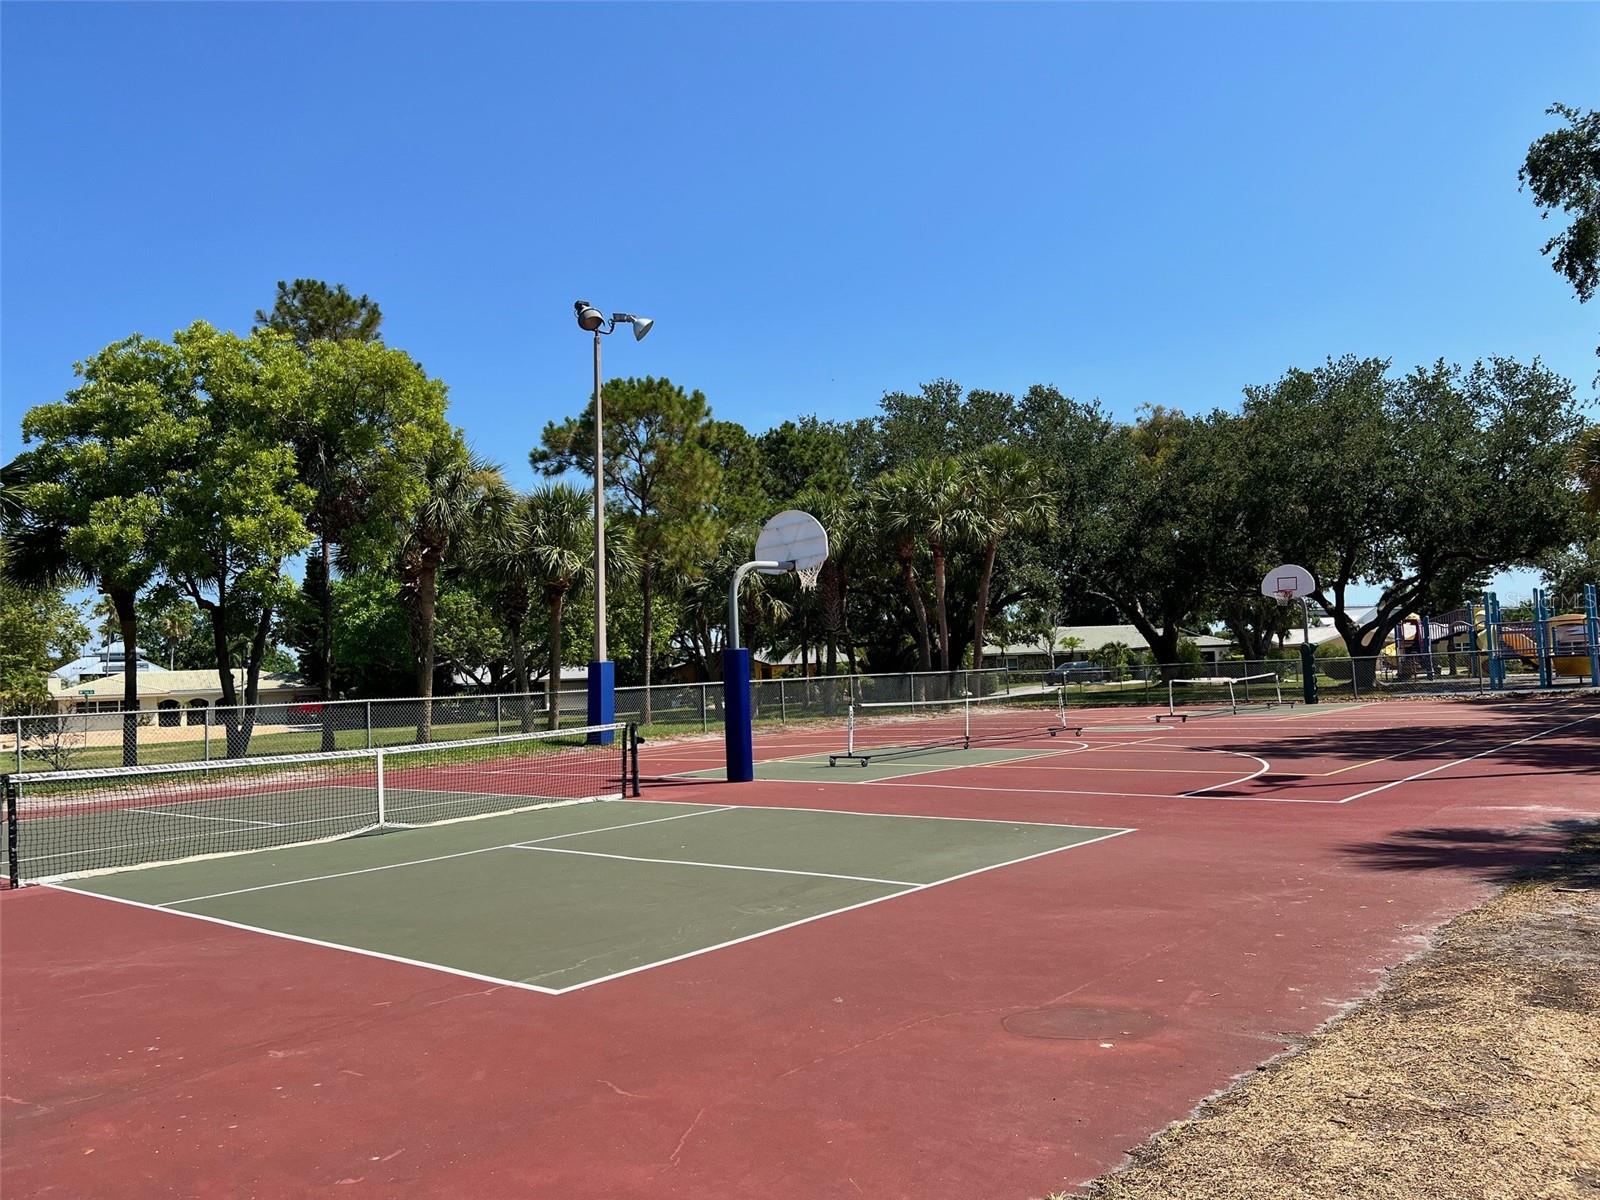 Vina Del Mar Pickleball and basketball court